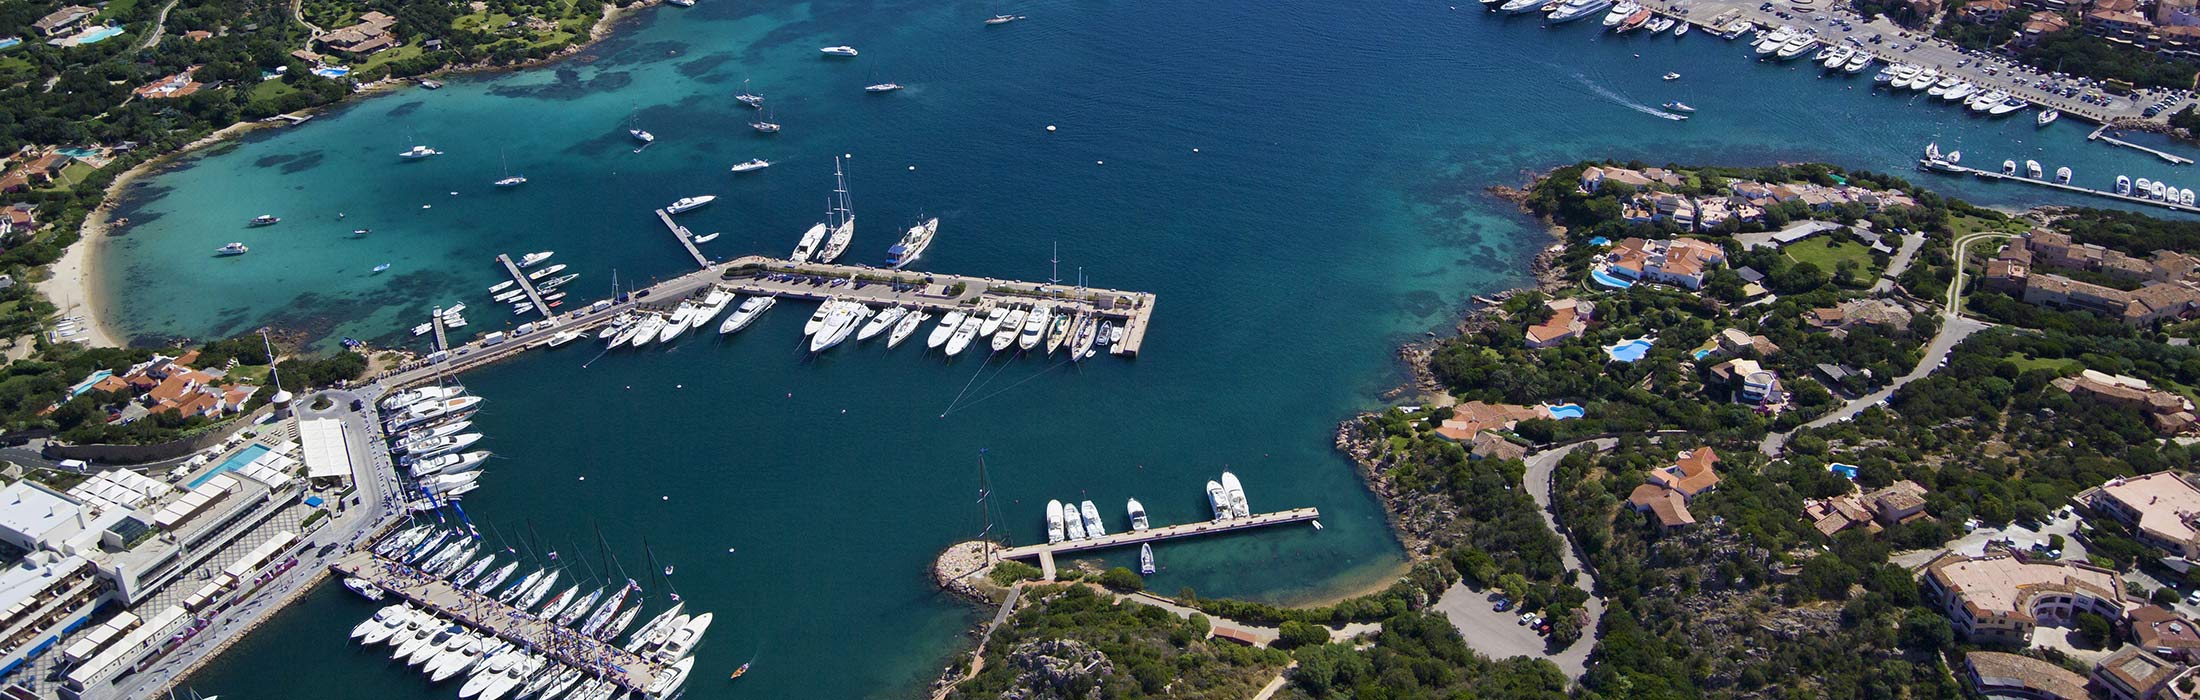 top yacht charter destinations mediterranean sardinia and corsica olbia main slider 1